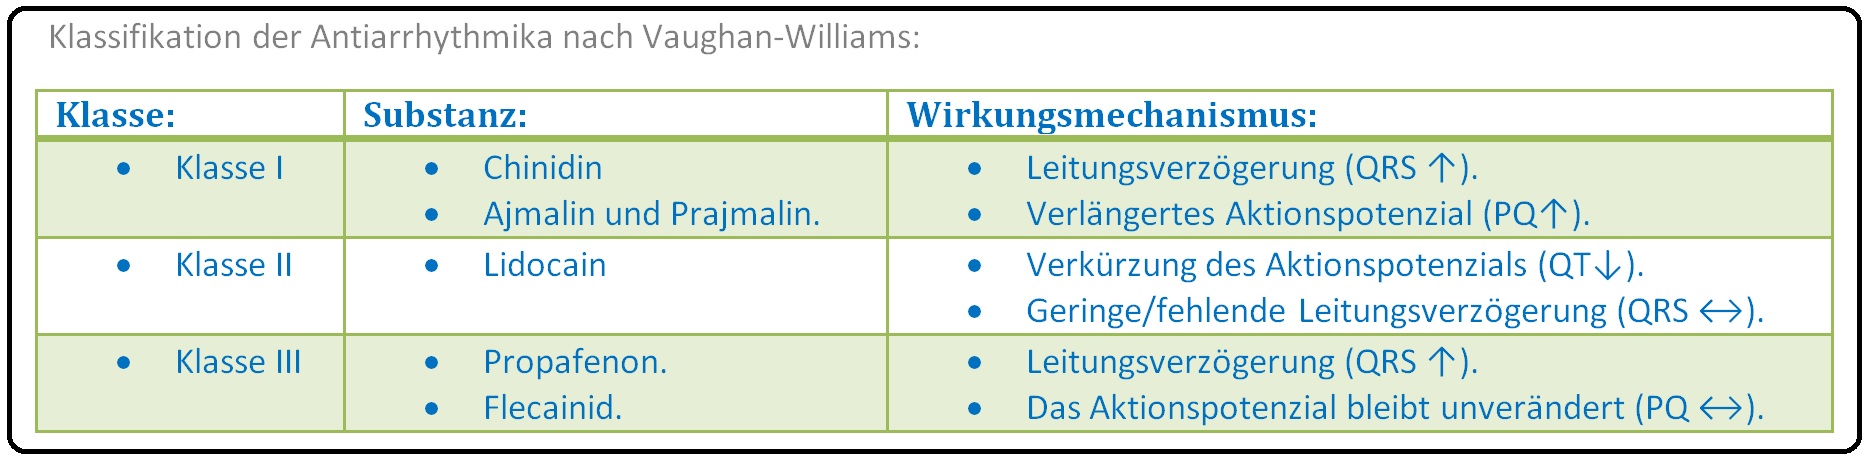 56 Klassifikation der Antiarrhythmika nach Vaughan Williams